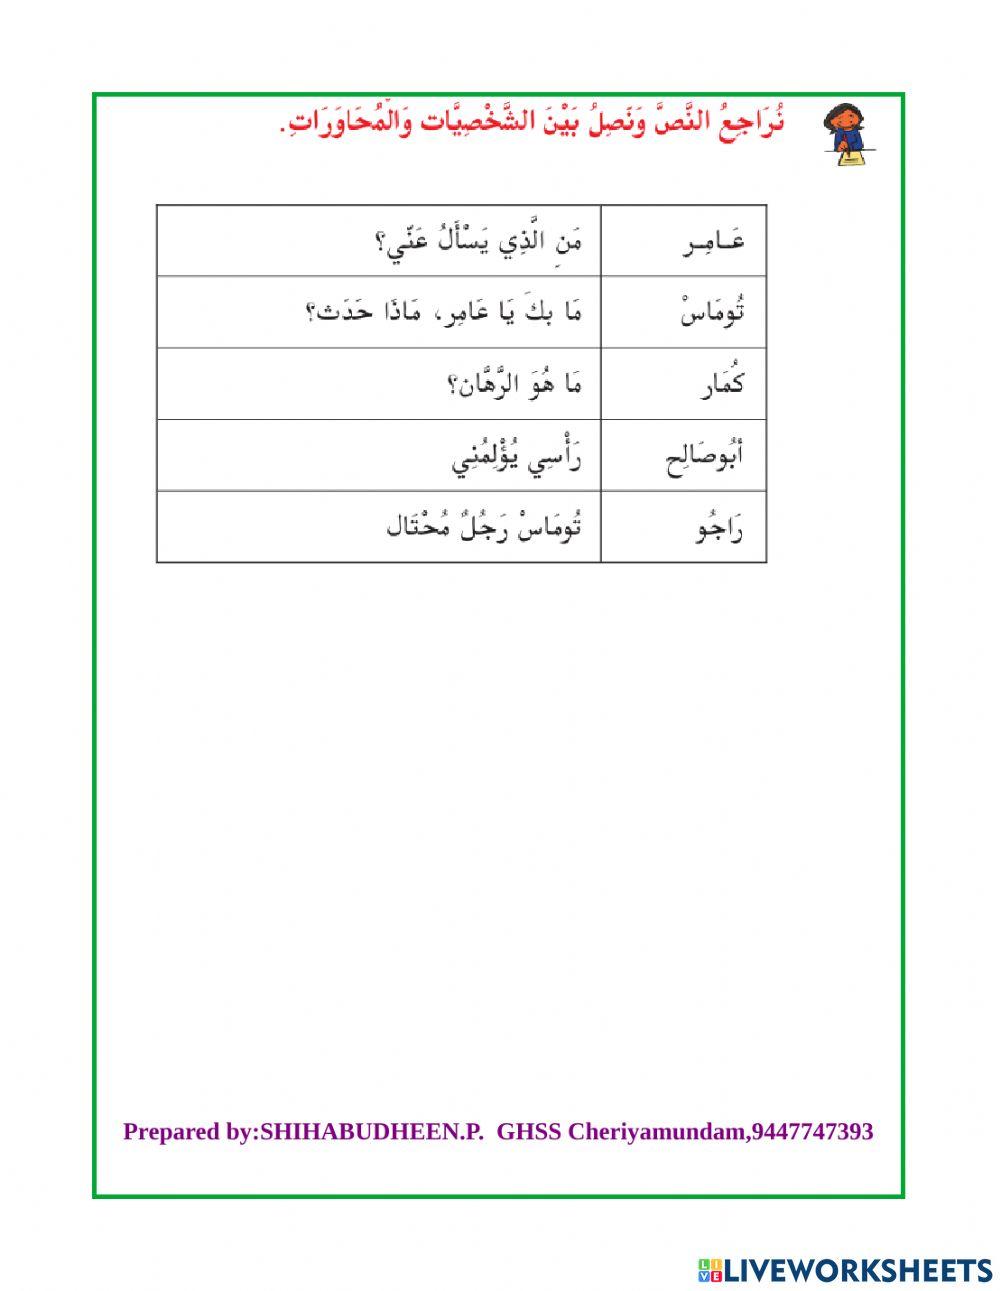 Arabic live work sheet